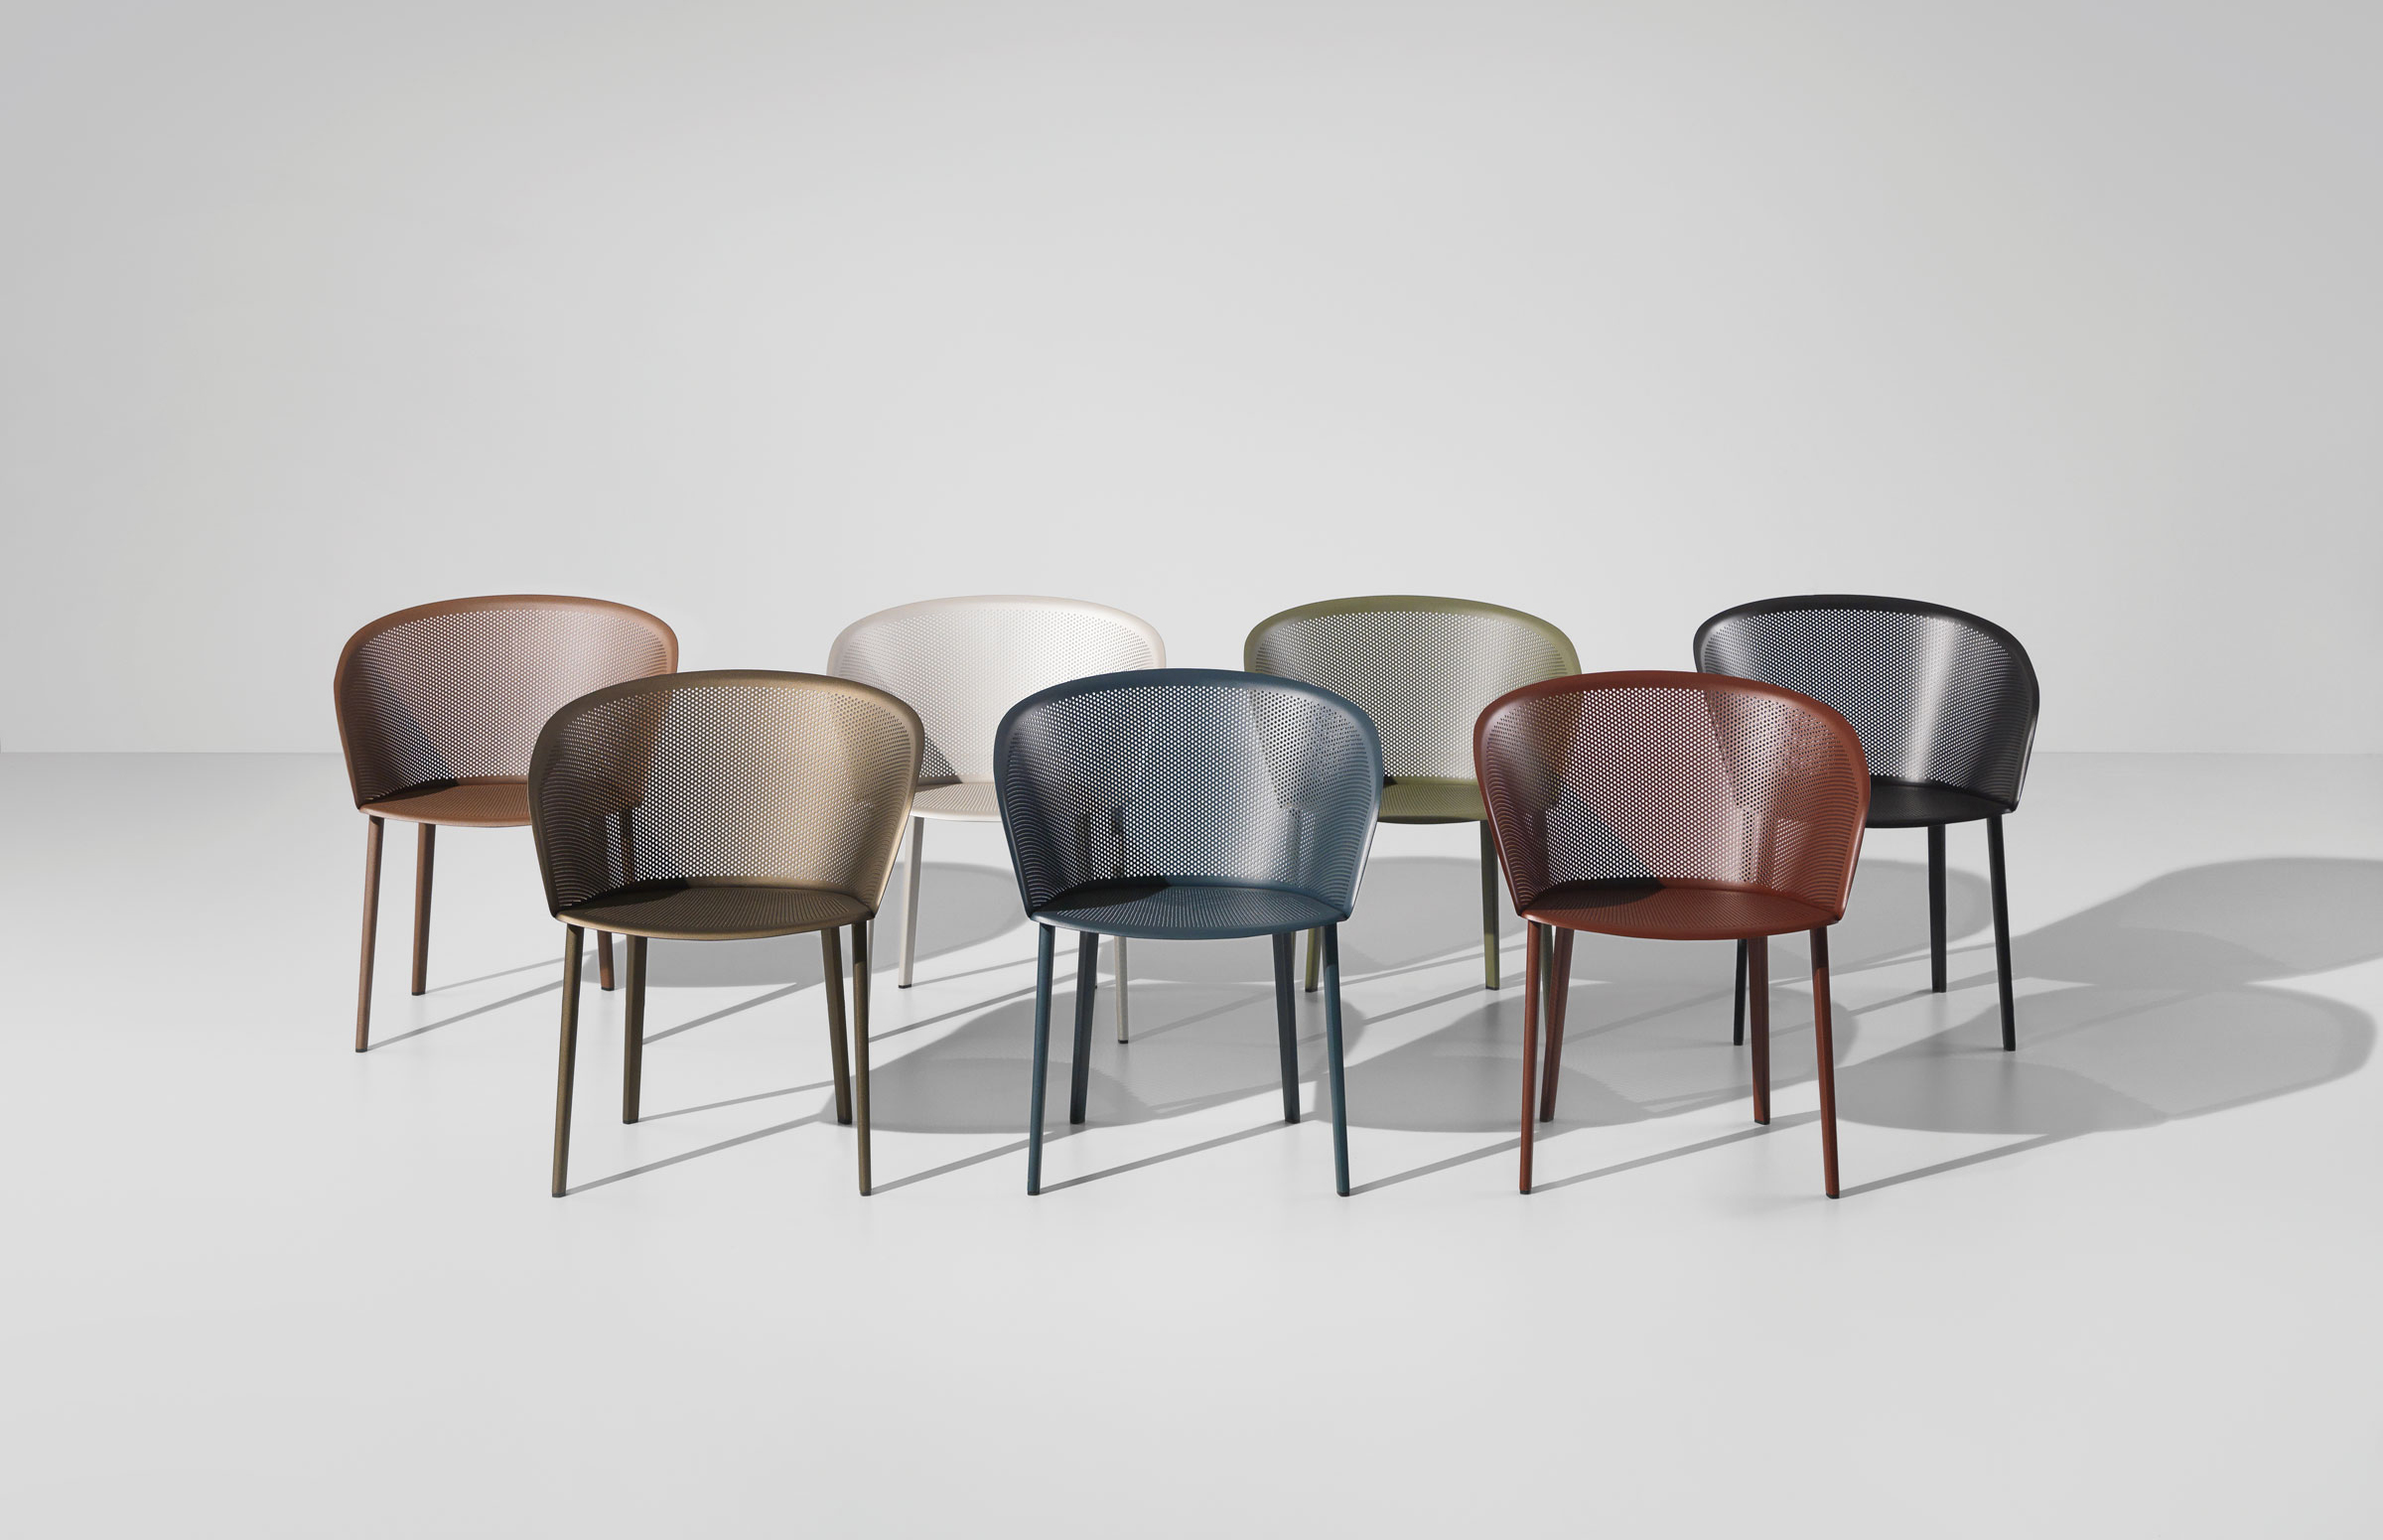 KETTAL STAMPA chairs by Ronan & Erwan Bouroullec